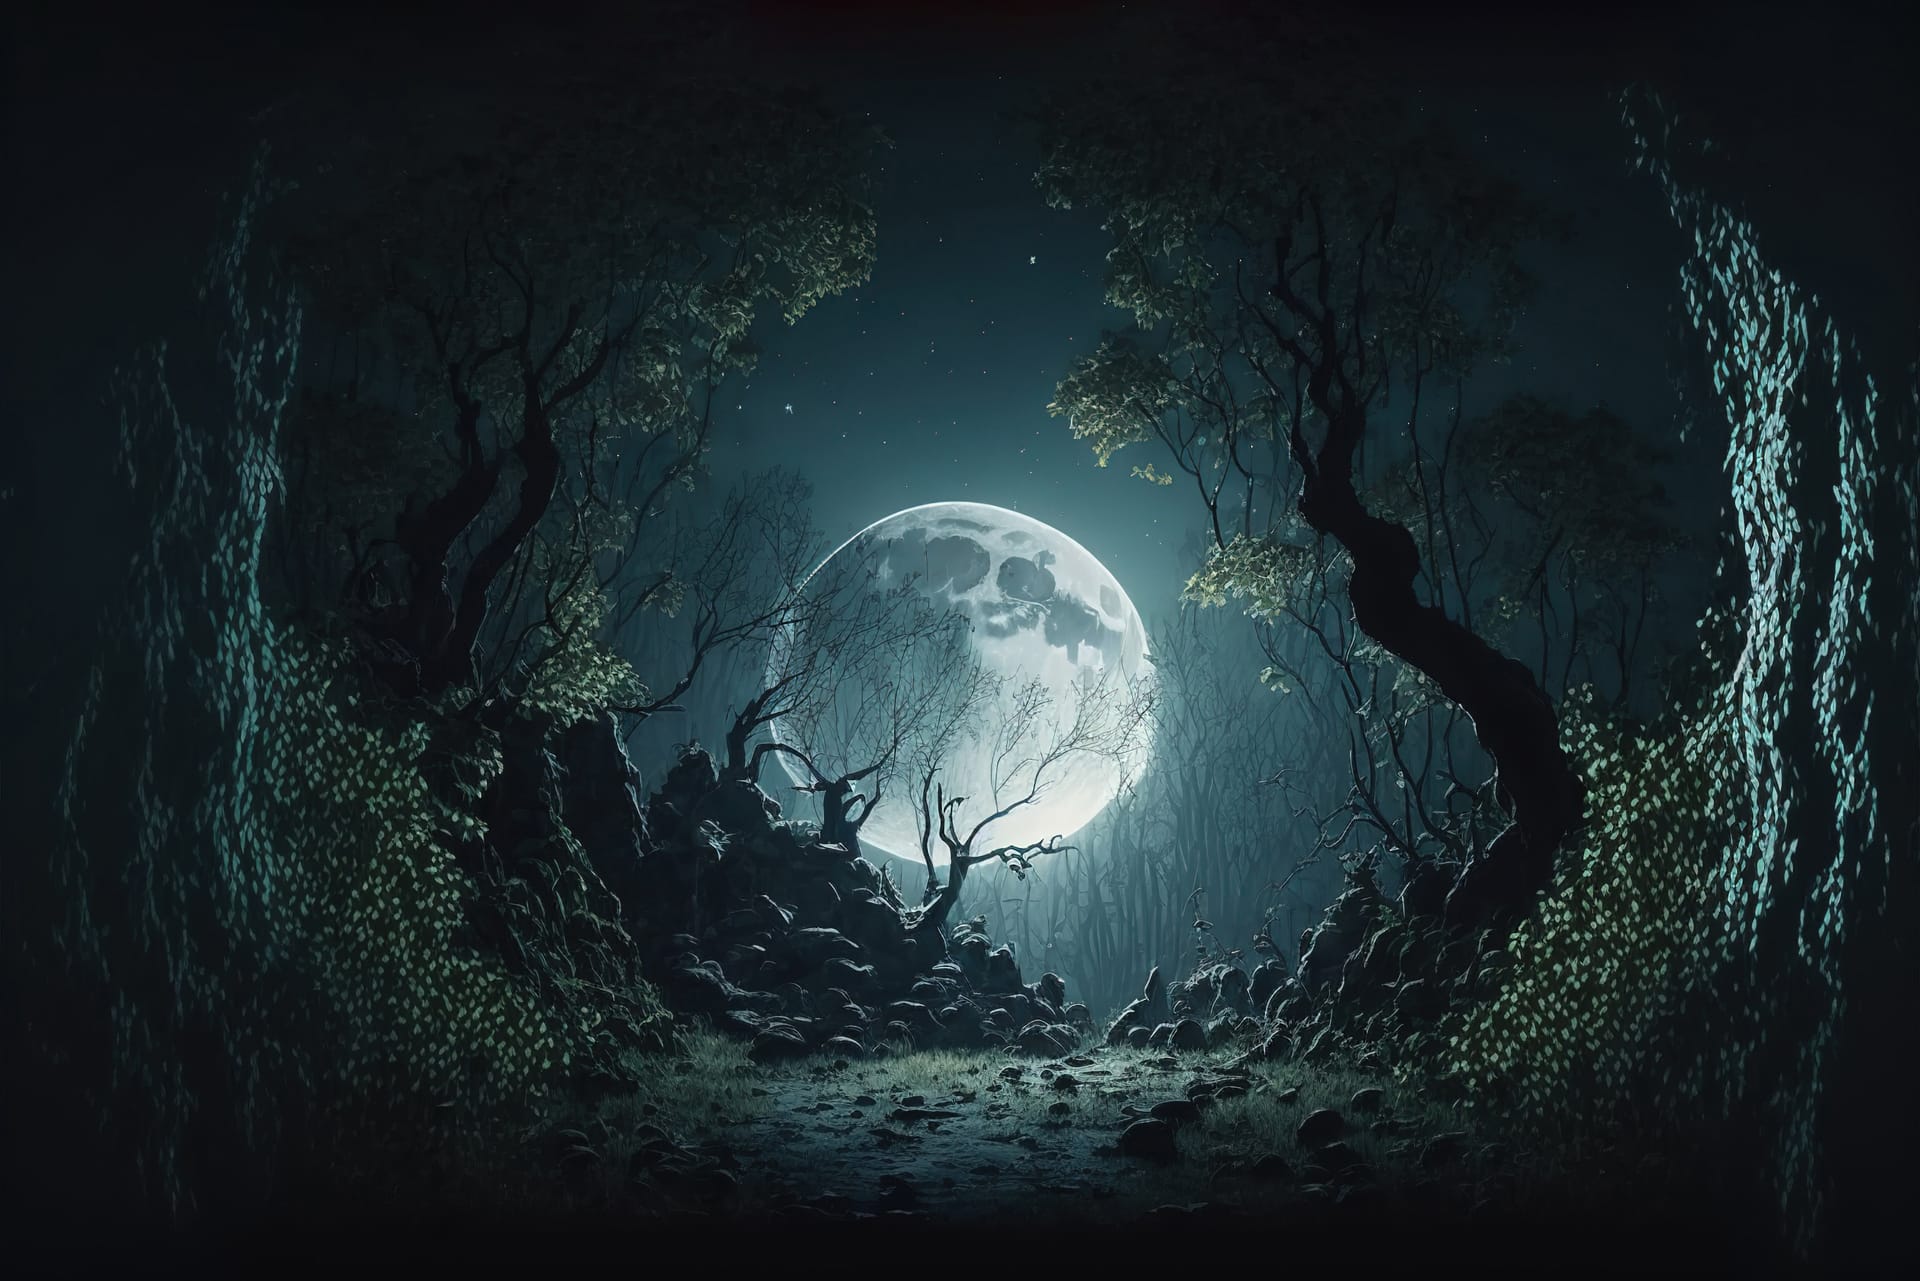 Three well forest moon light night image